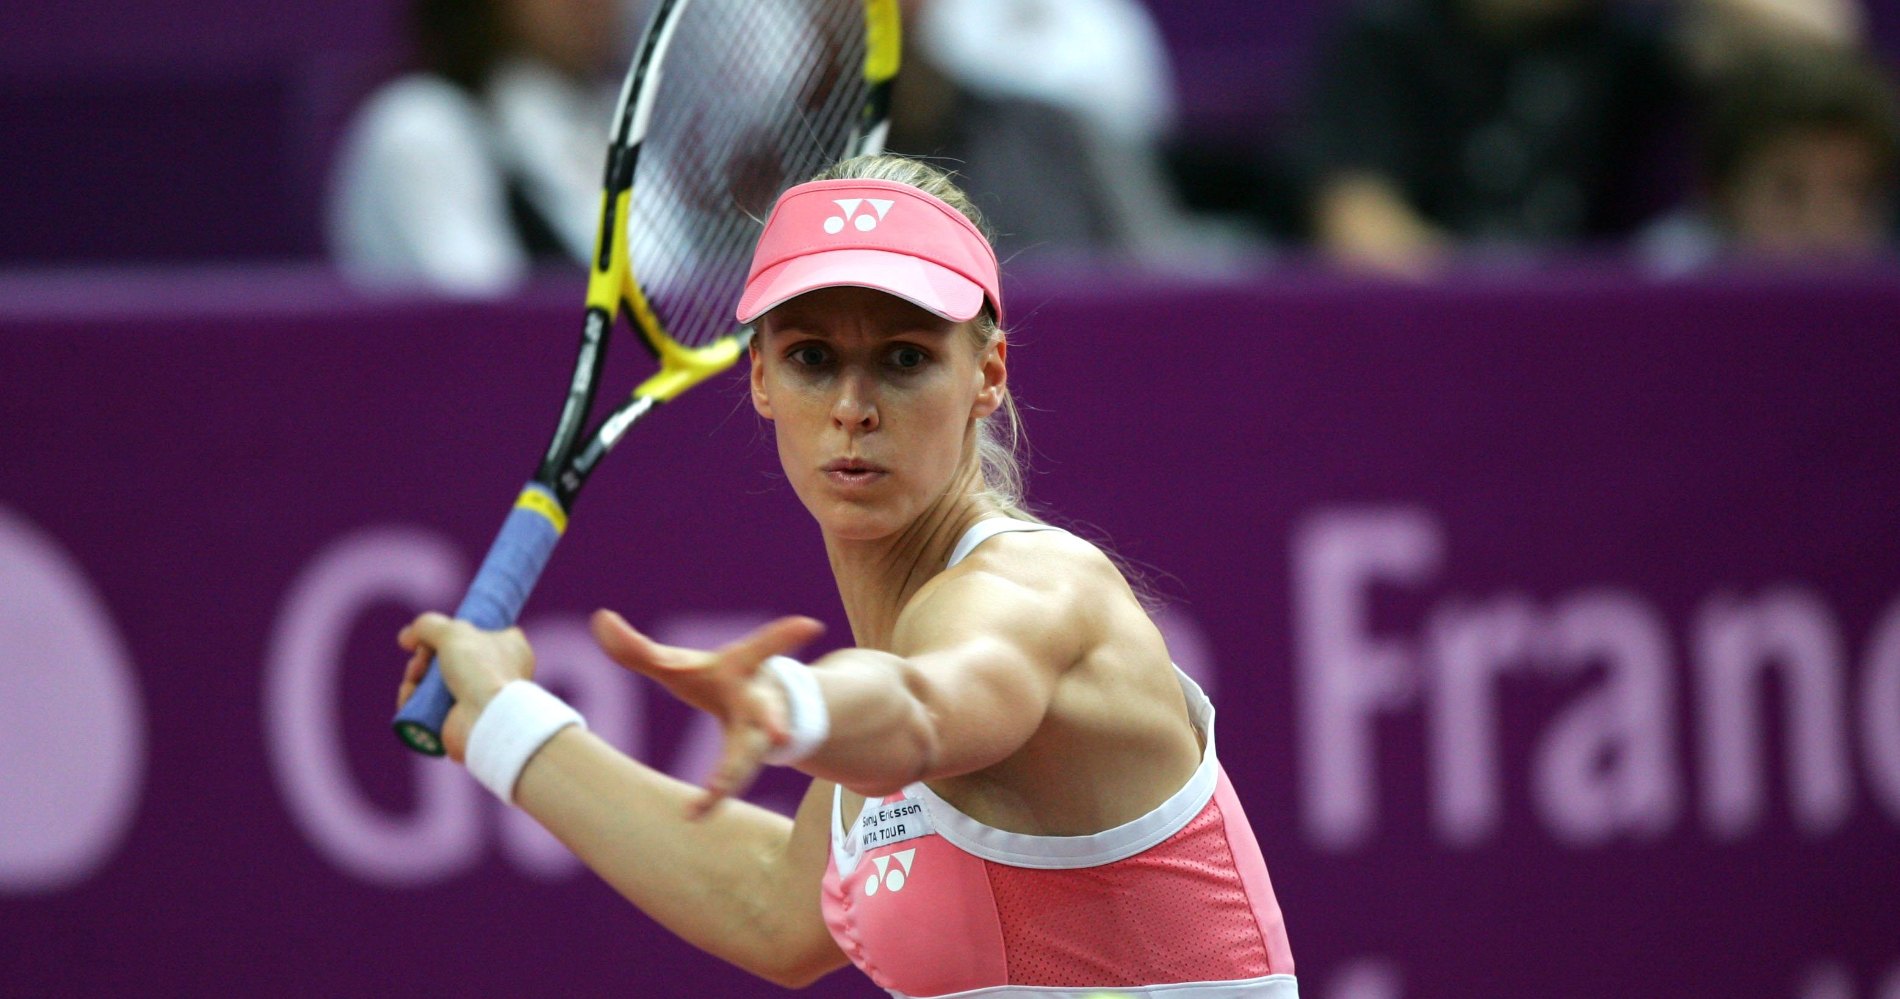 Tennis-WTA defends late start to Italian Open women's final, WKZO, Everything Kalamazoo